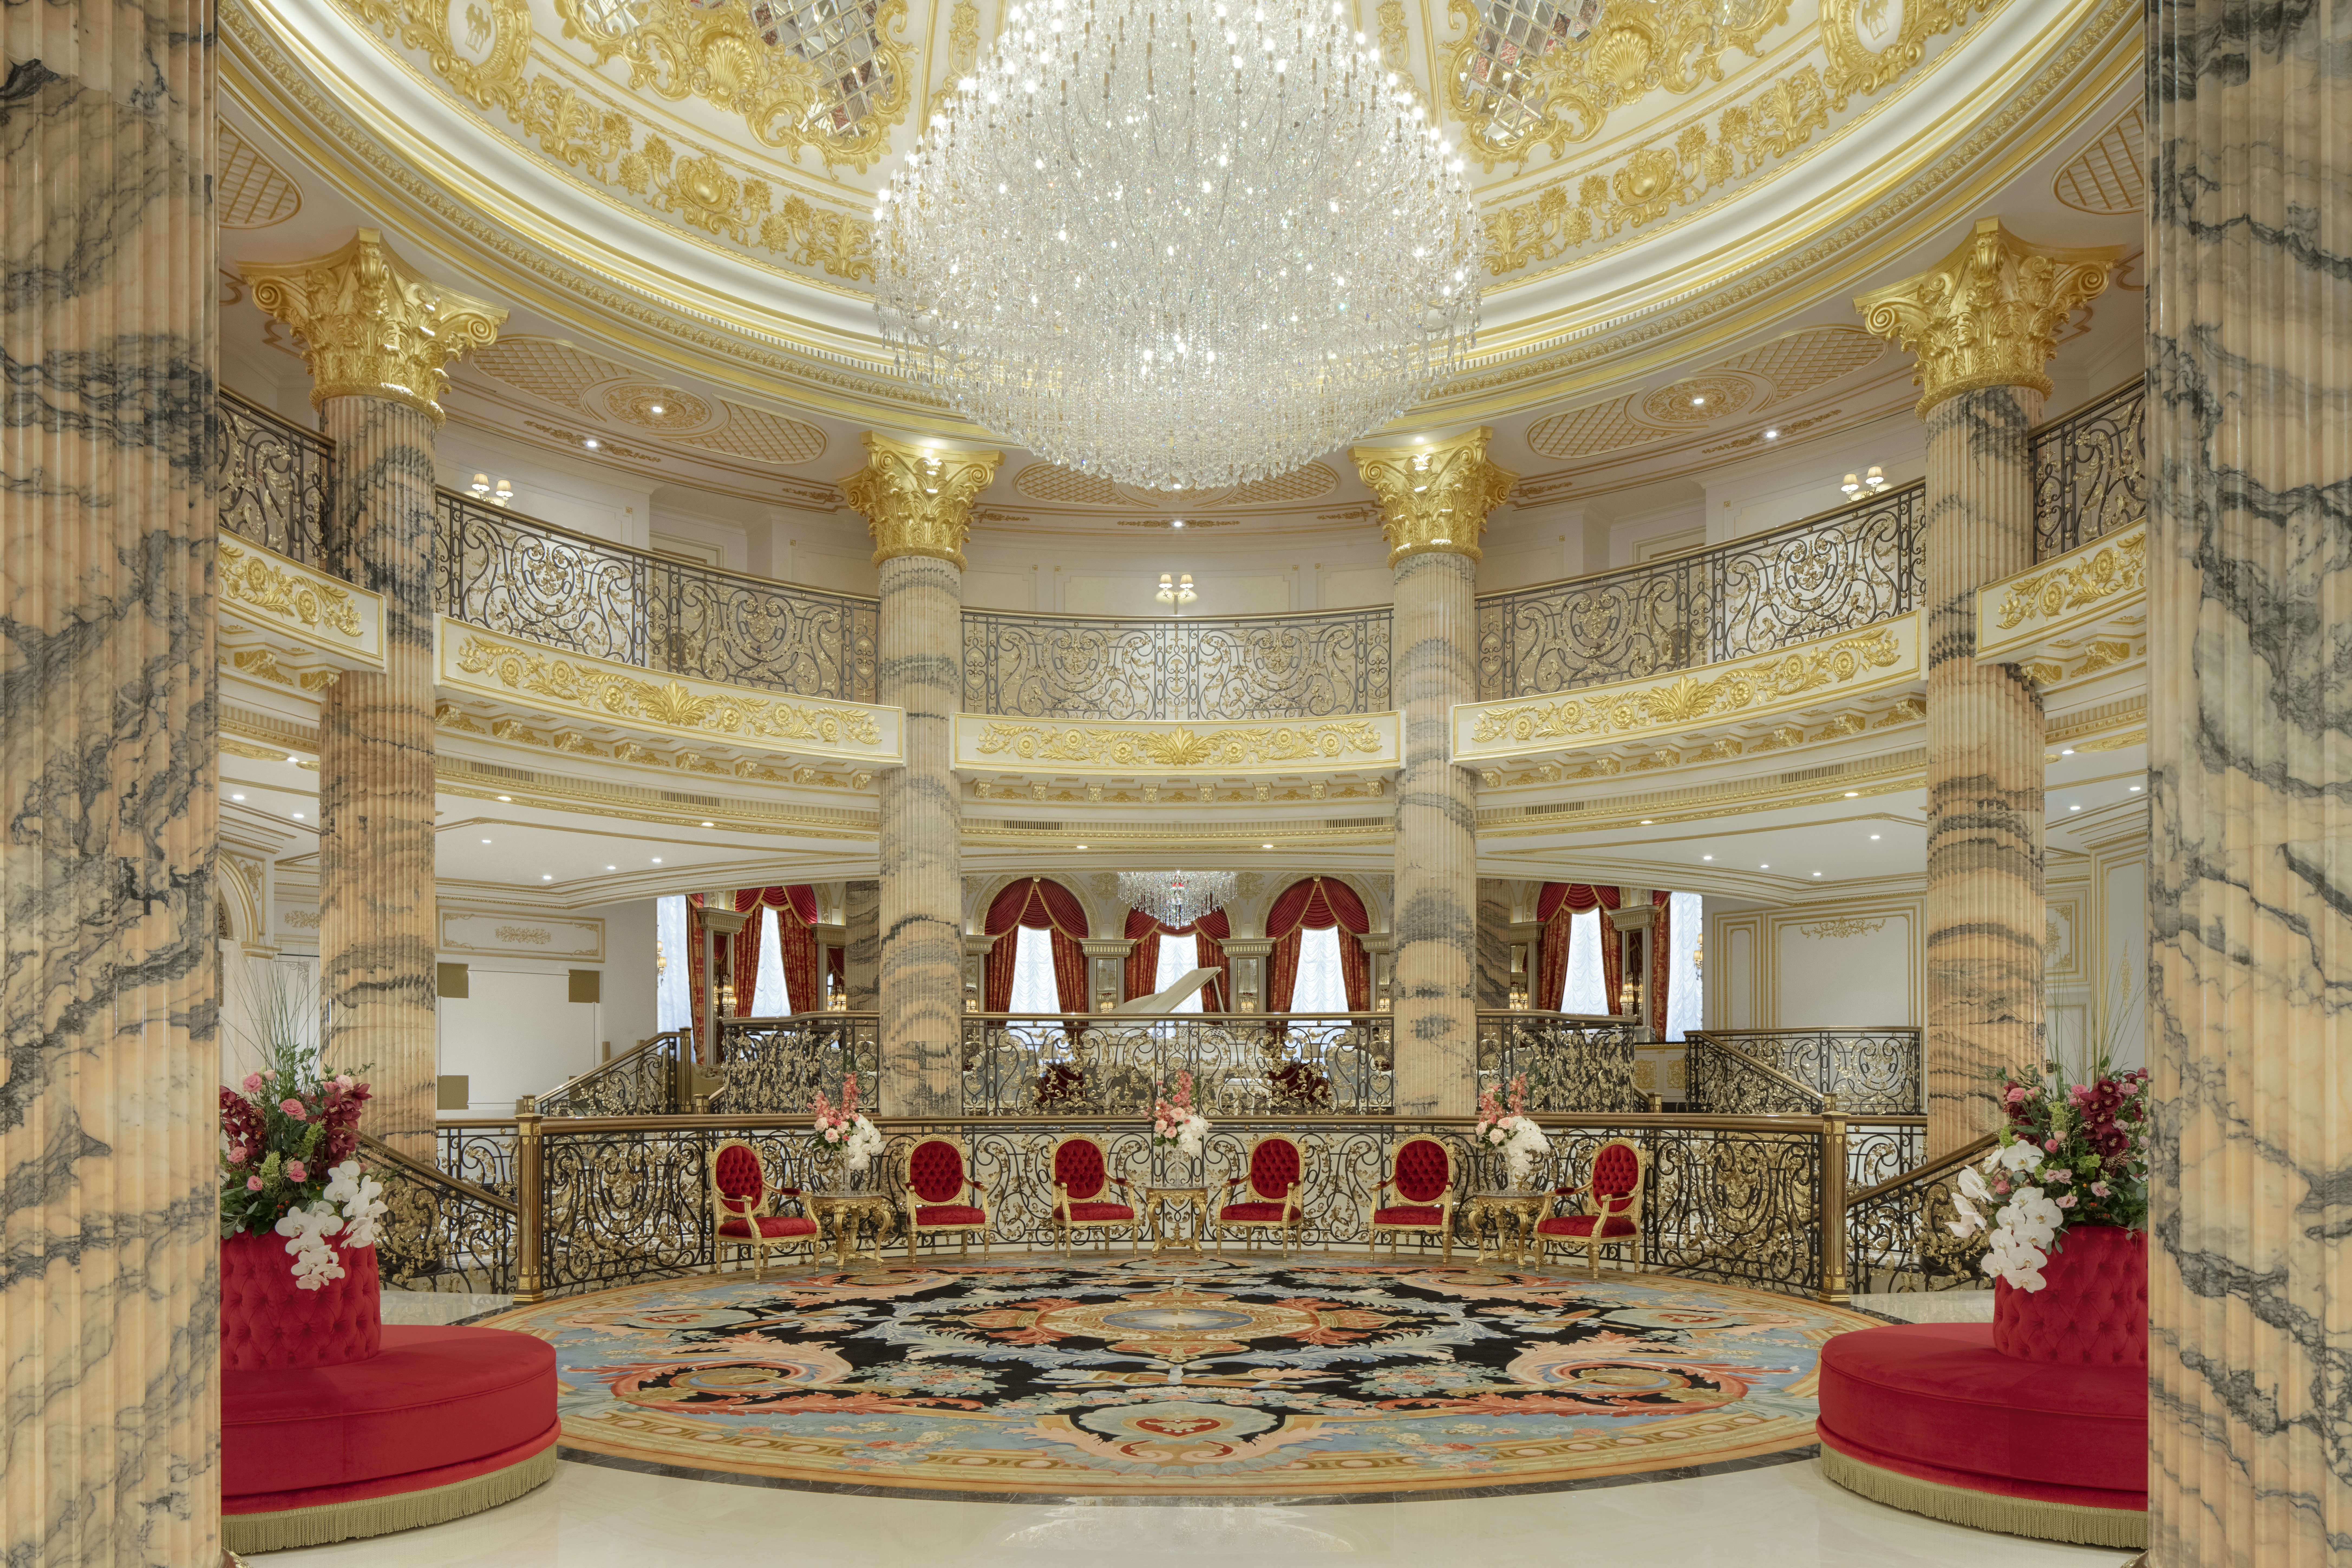 Raffles The Palm Dubai - Grand Foyer.jpg